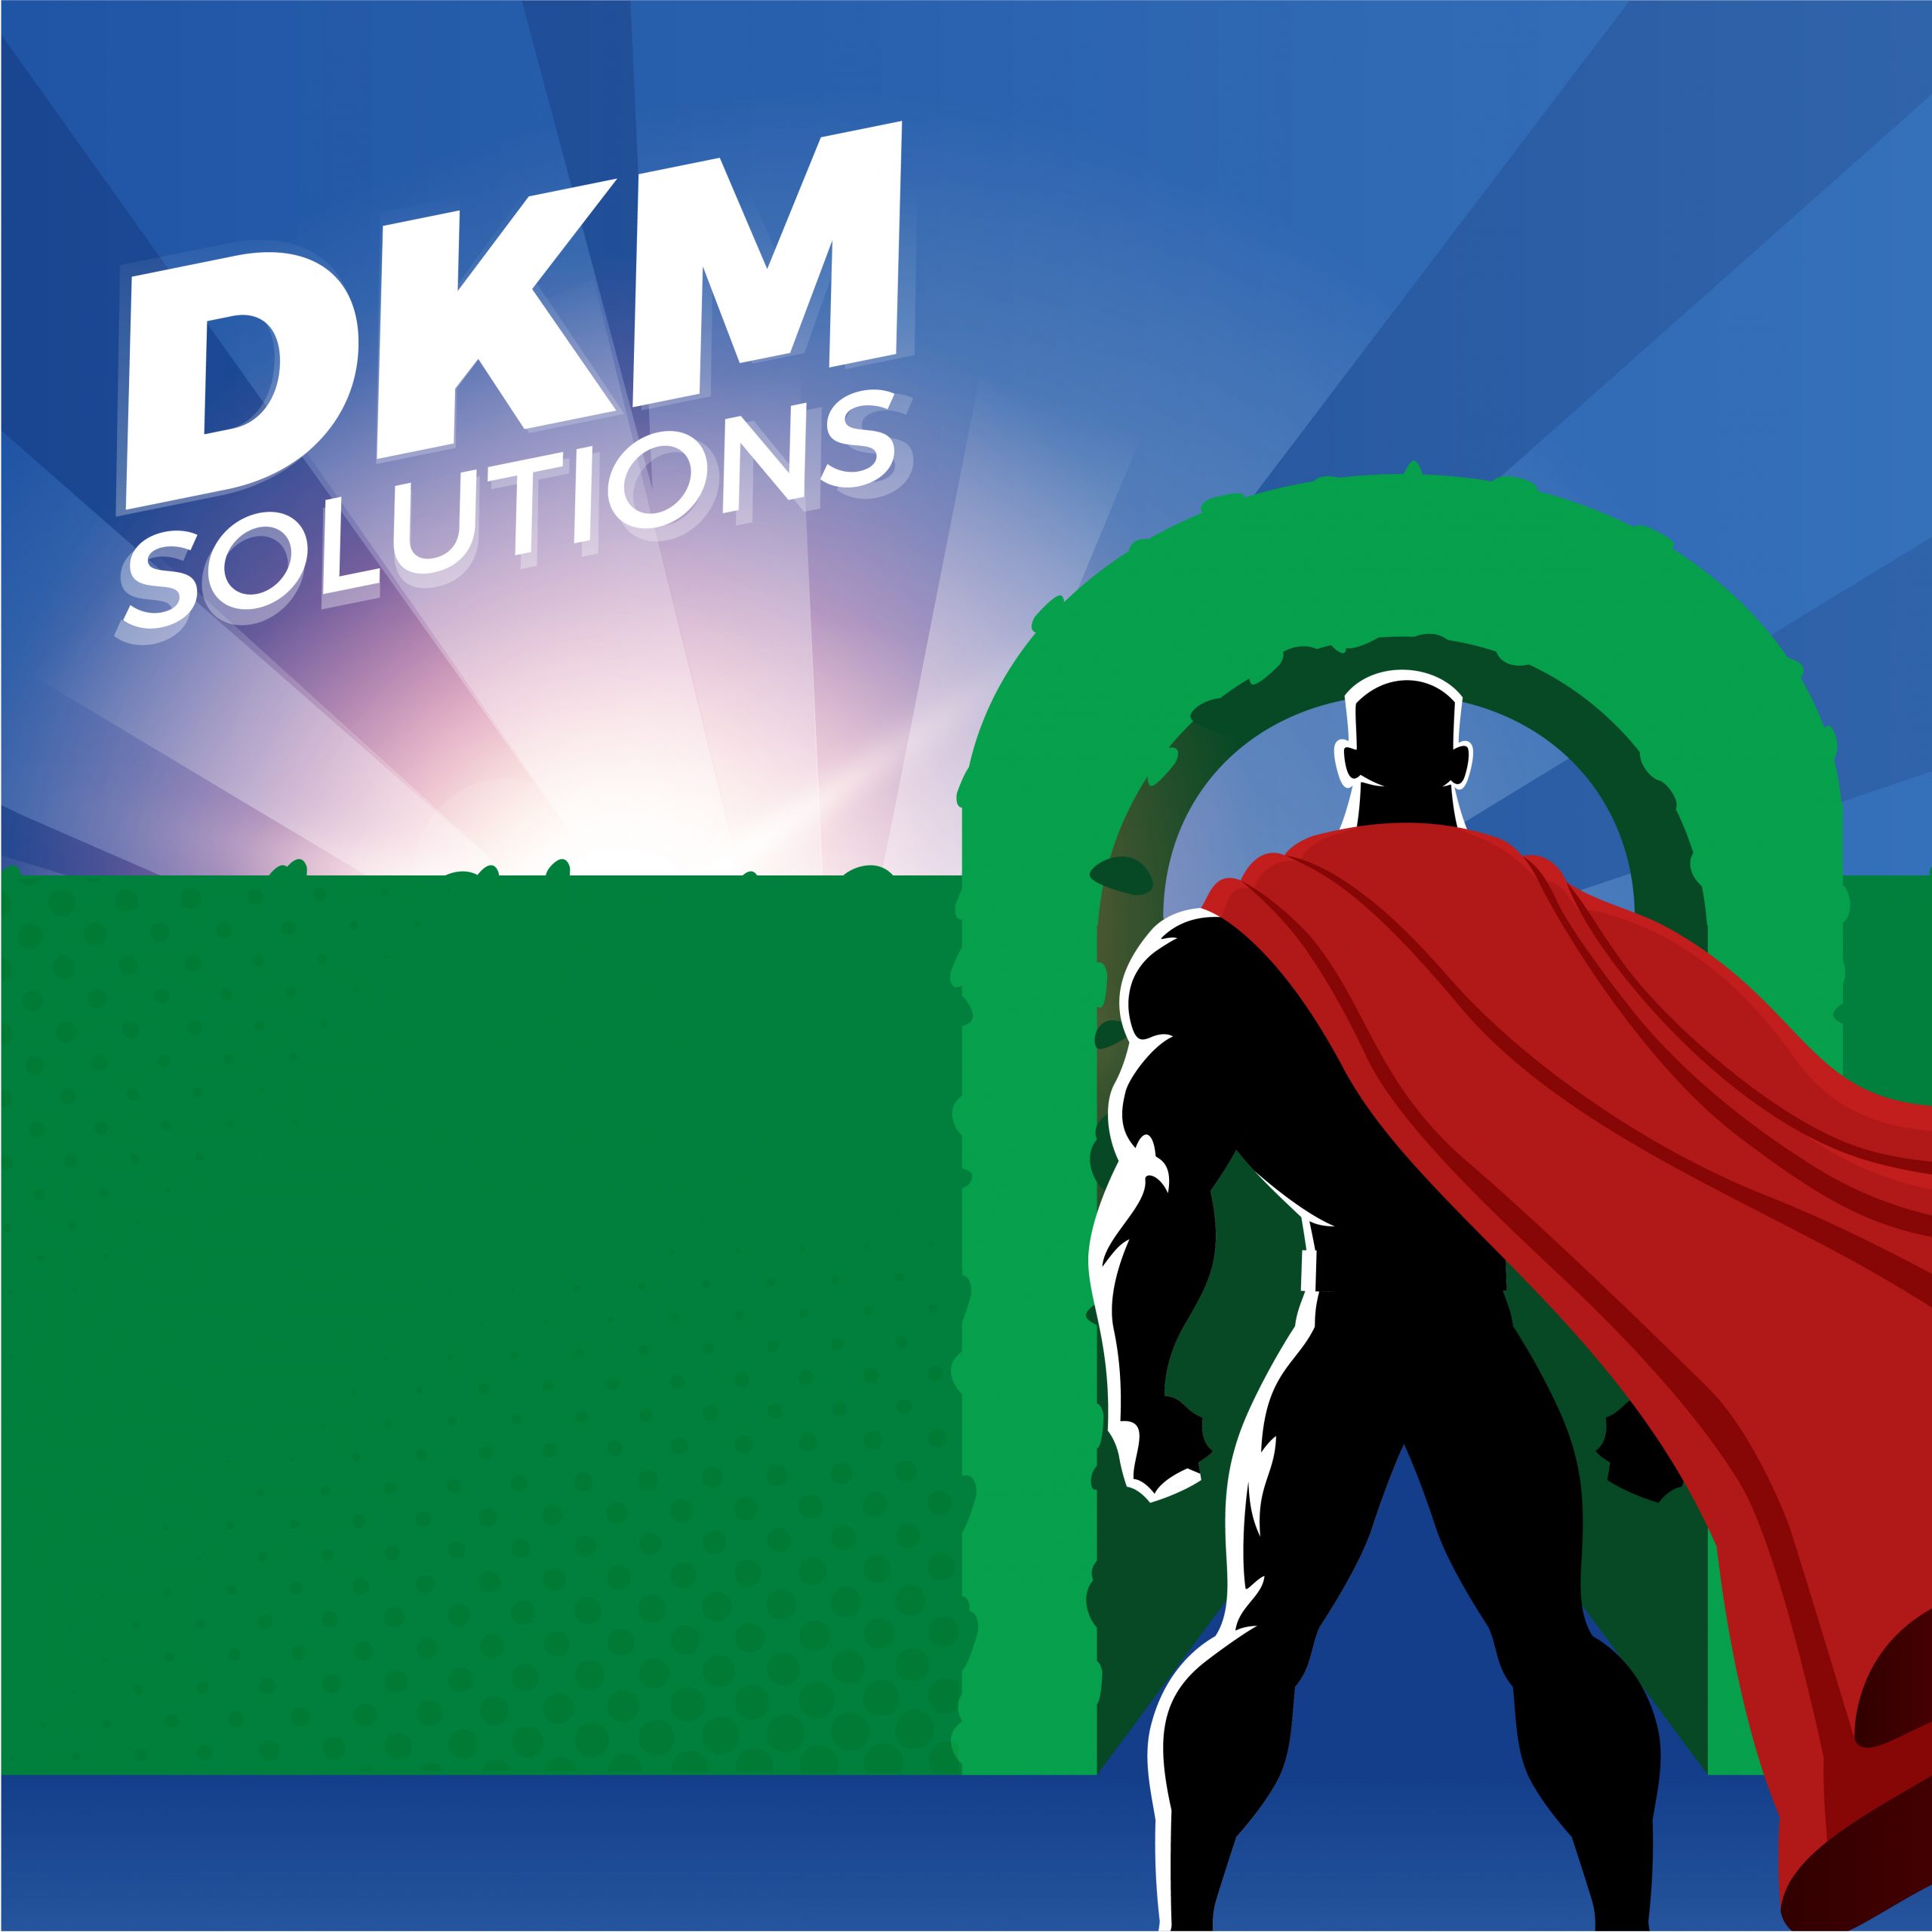 dkm solutions blog header vierkant somers tuinen